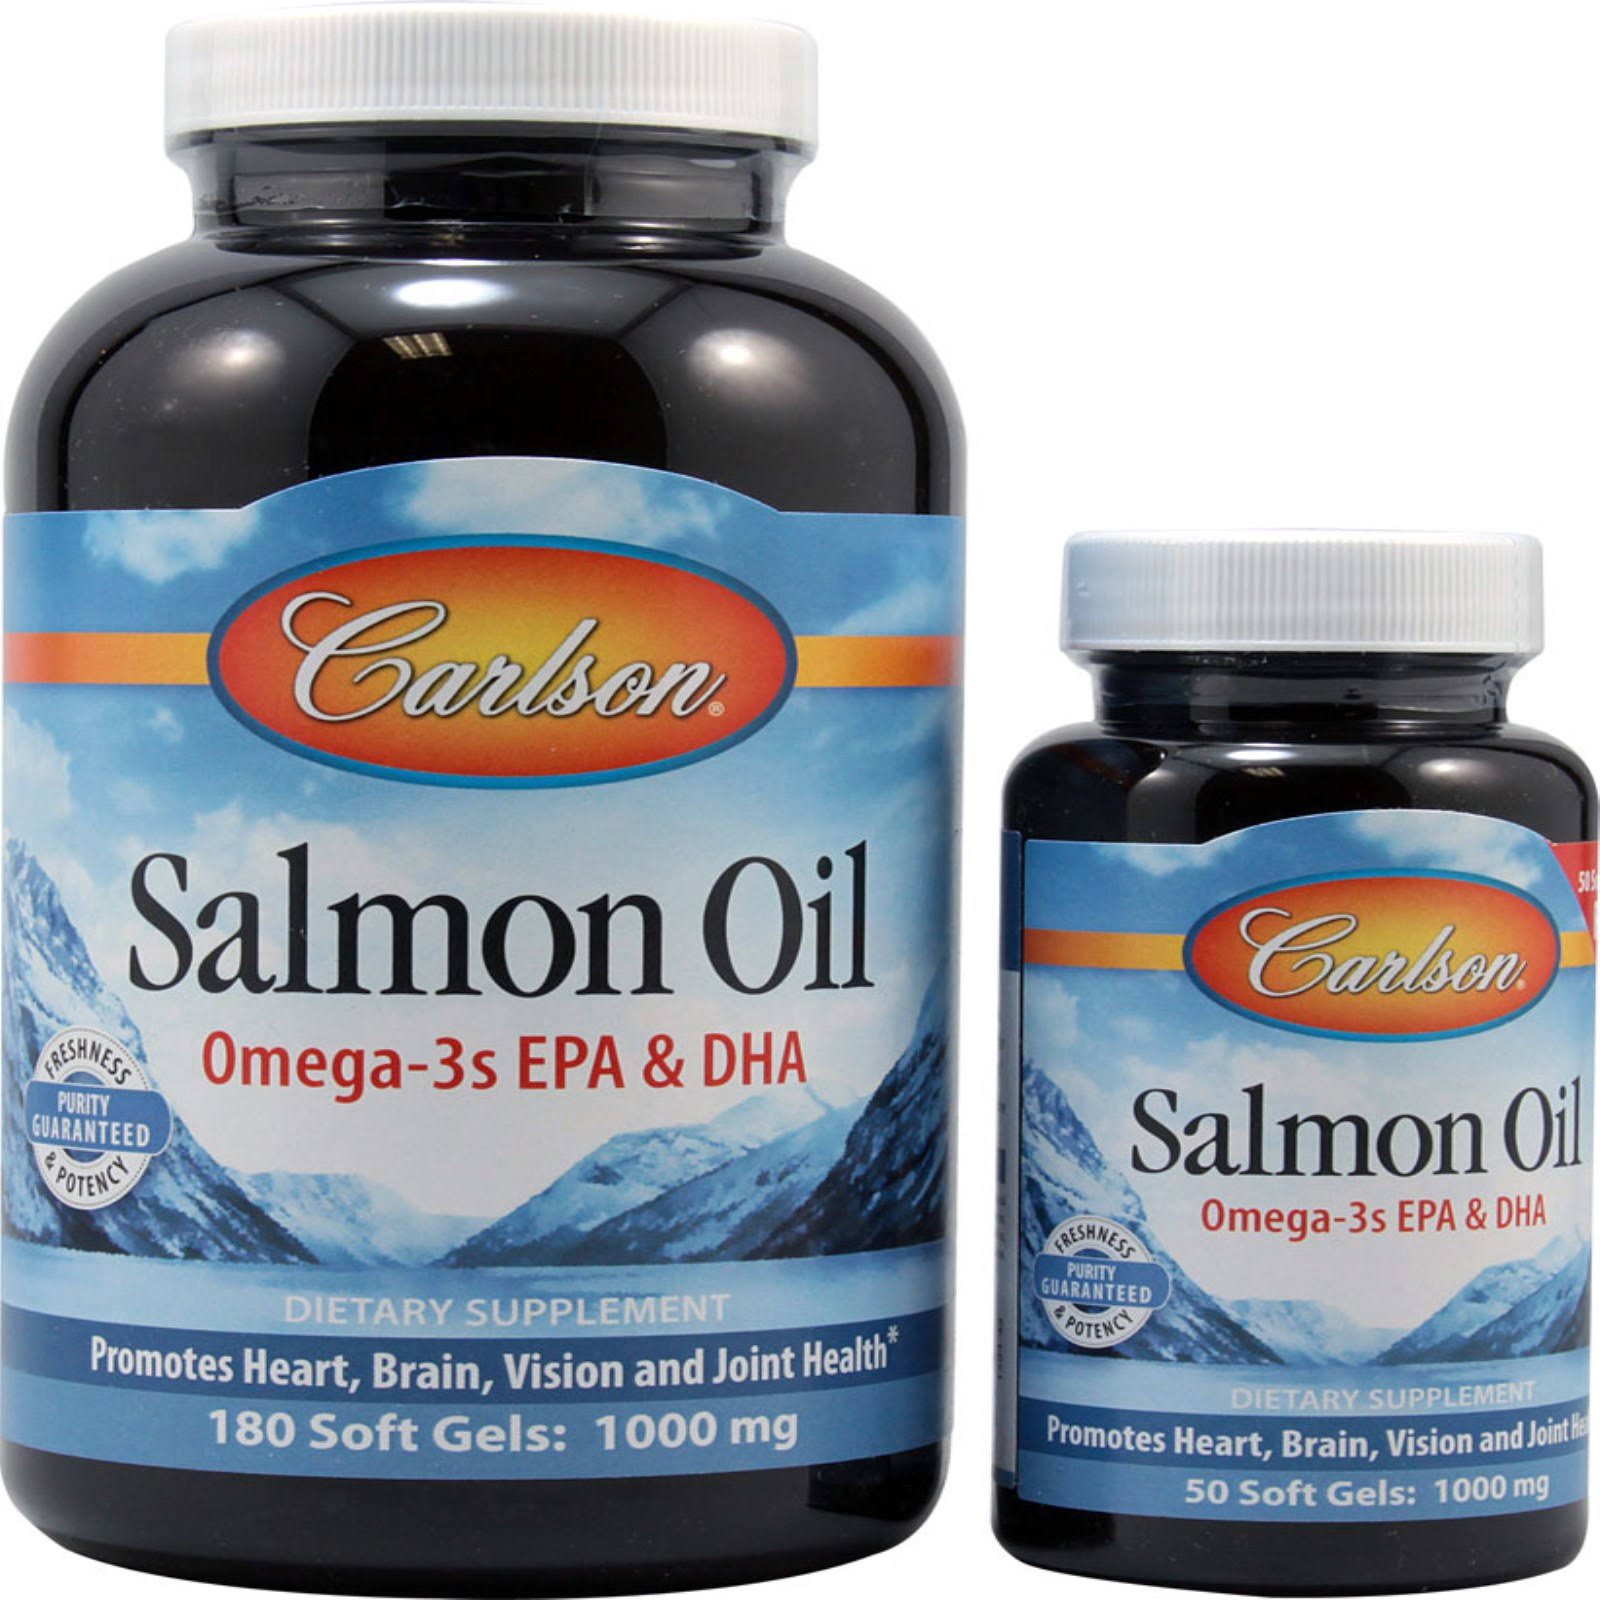 Carlson Salmon Oil - 1000mg, 180 softgels